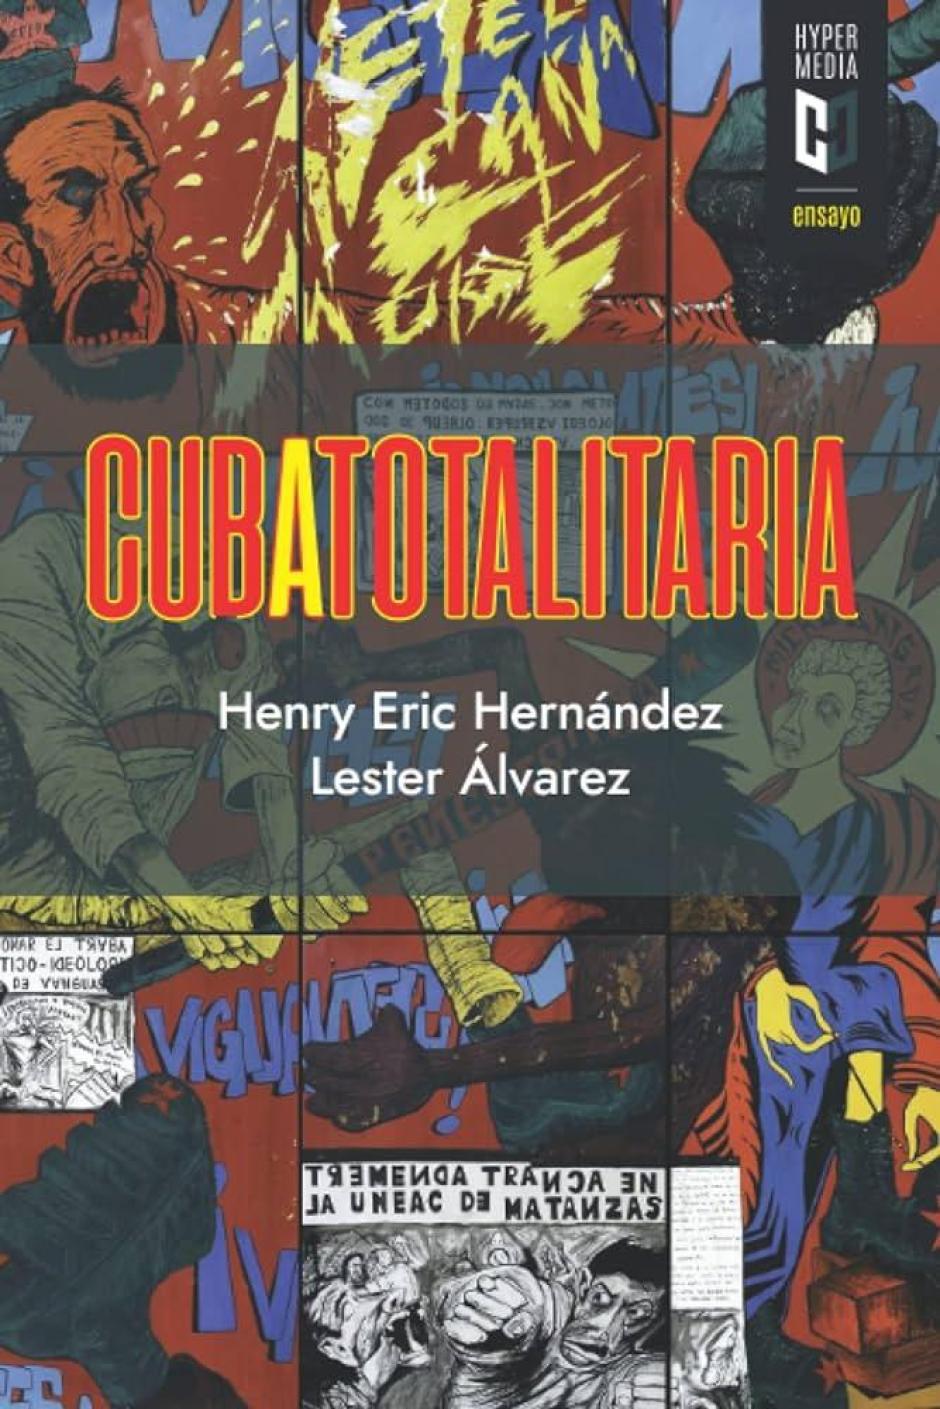 'Cuba totalitaria', de Henry Eric Hernández y Lester Álvarez